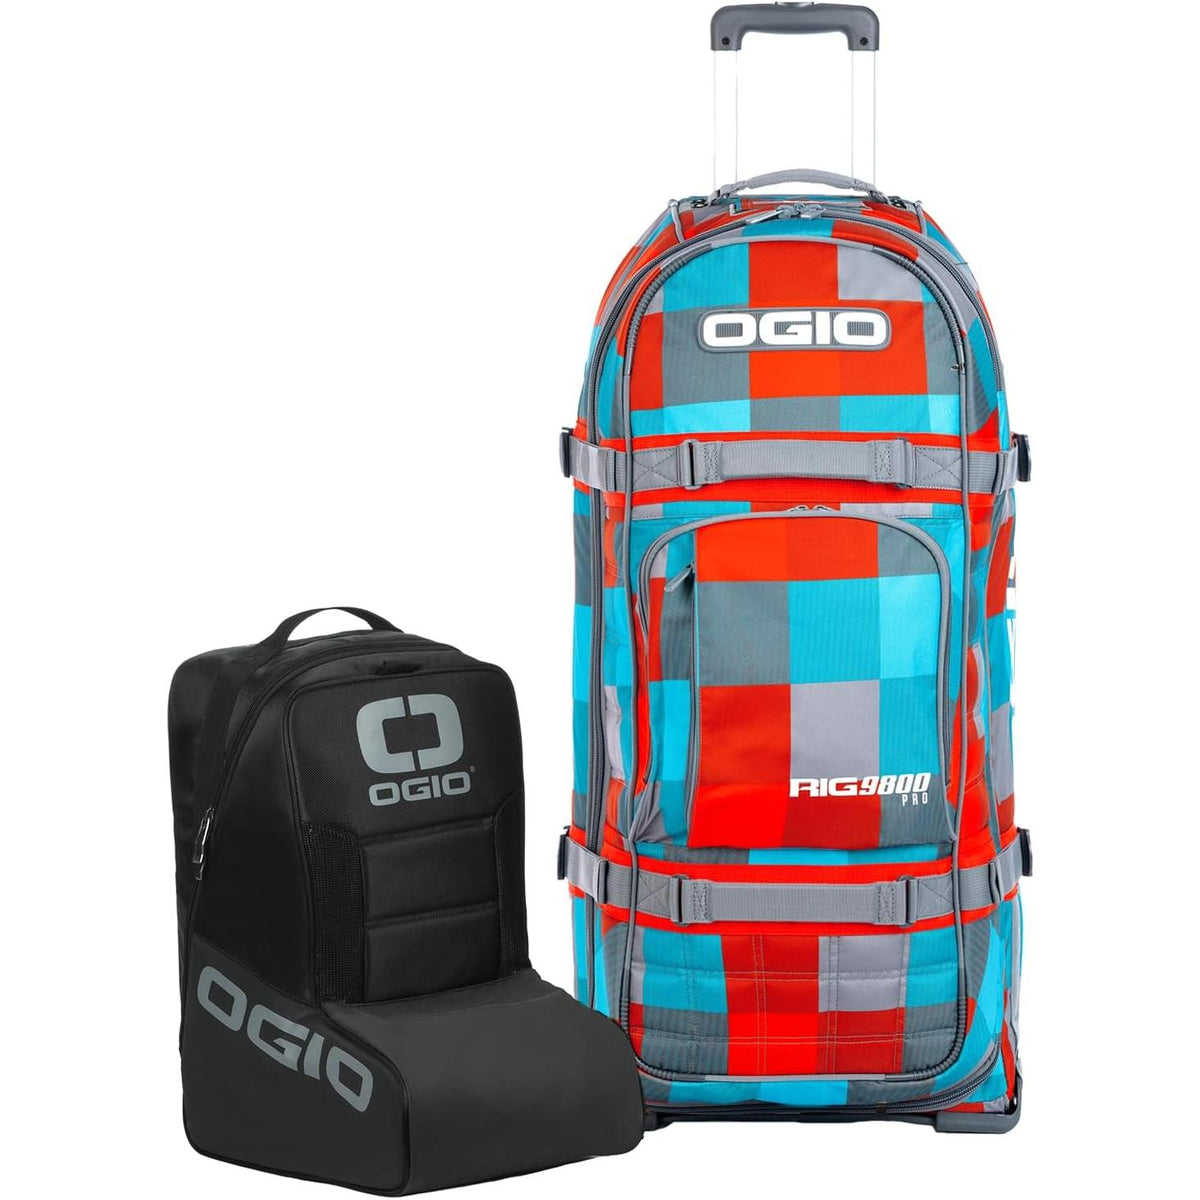 Ogio Rig 9800 Pro Bag